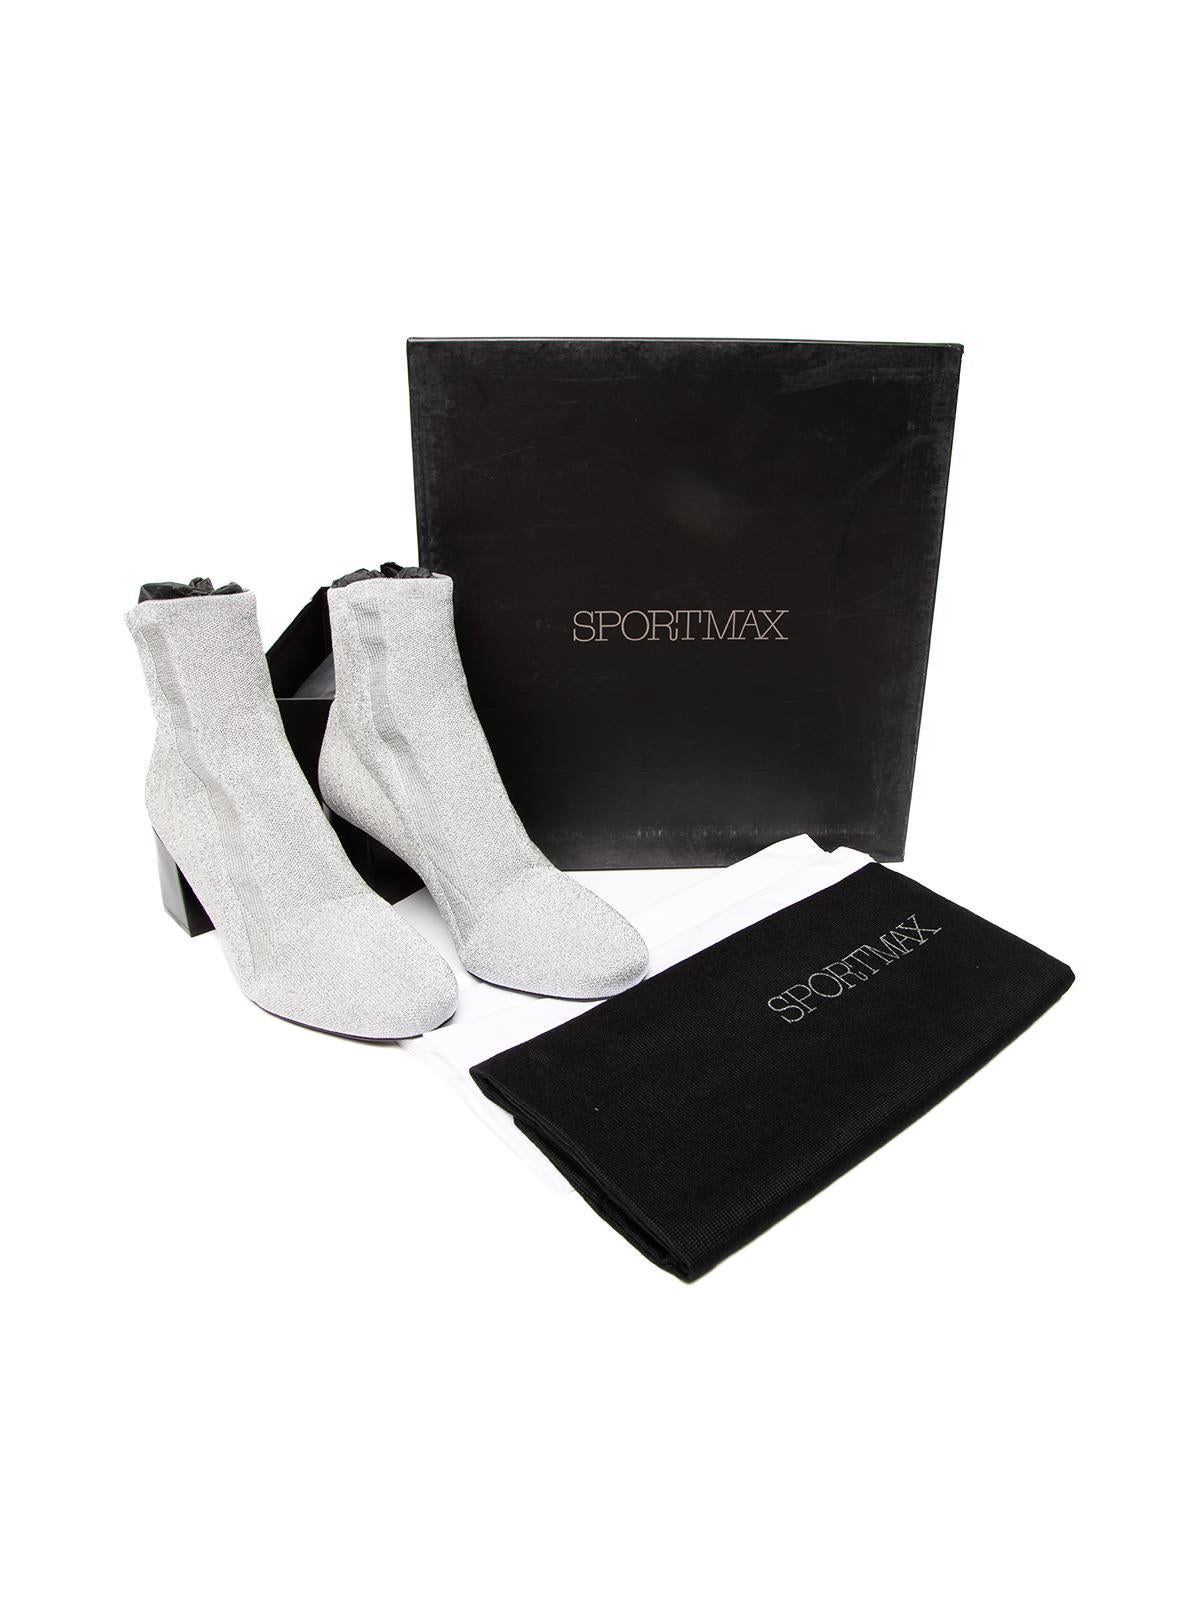 Sportmax Glitter Ankle Sock Boots Size IT 36.5 For Sale 2